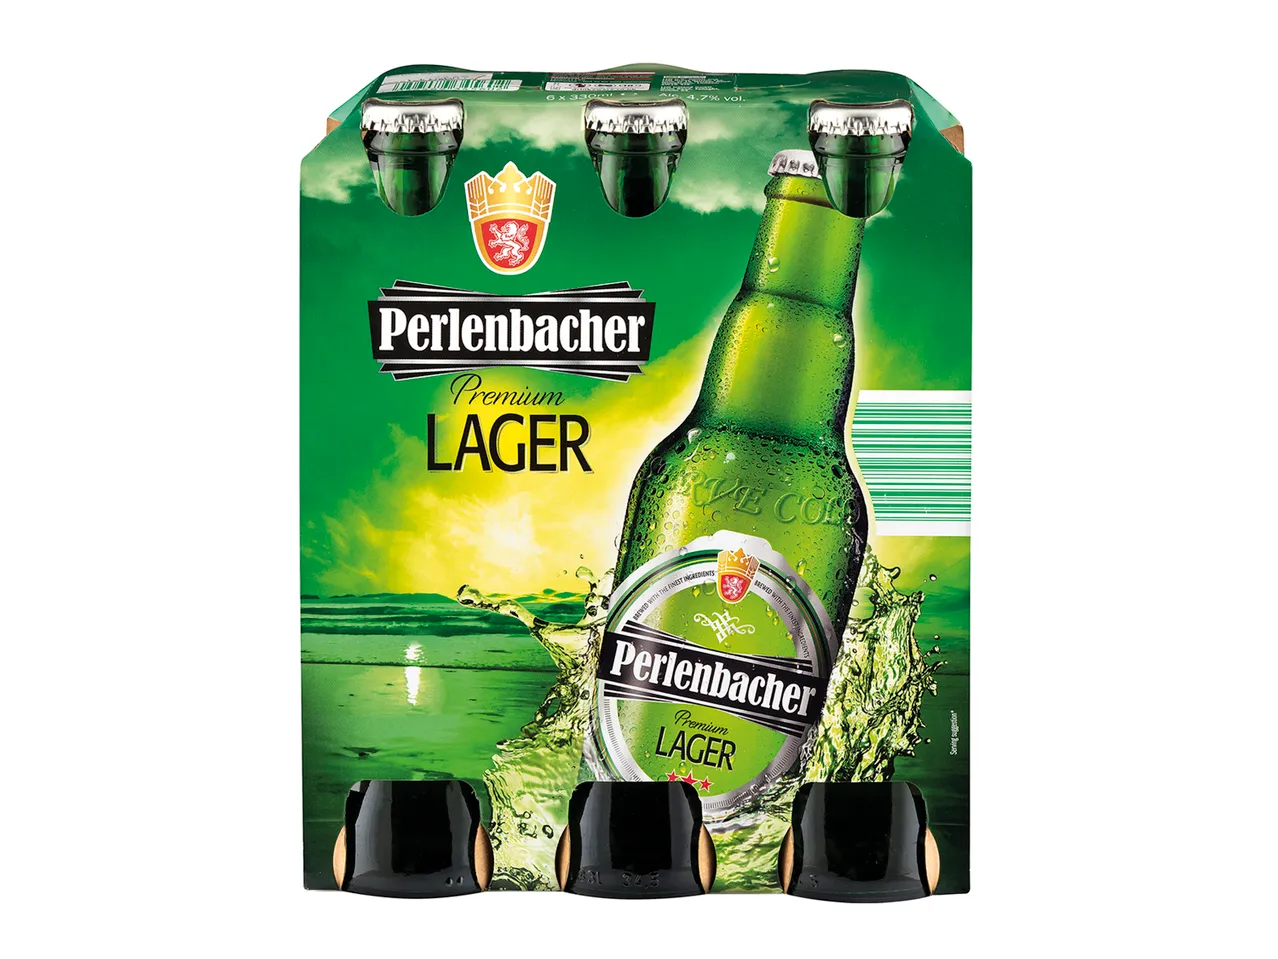 Go to full screen view: Perlenbacher Premium Lager - Image 1